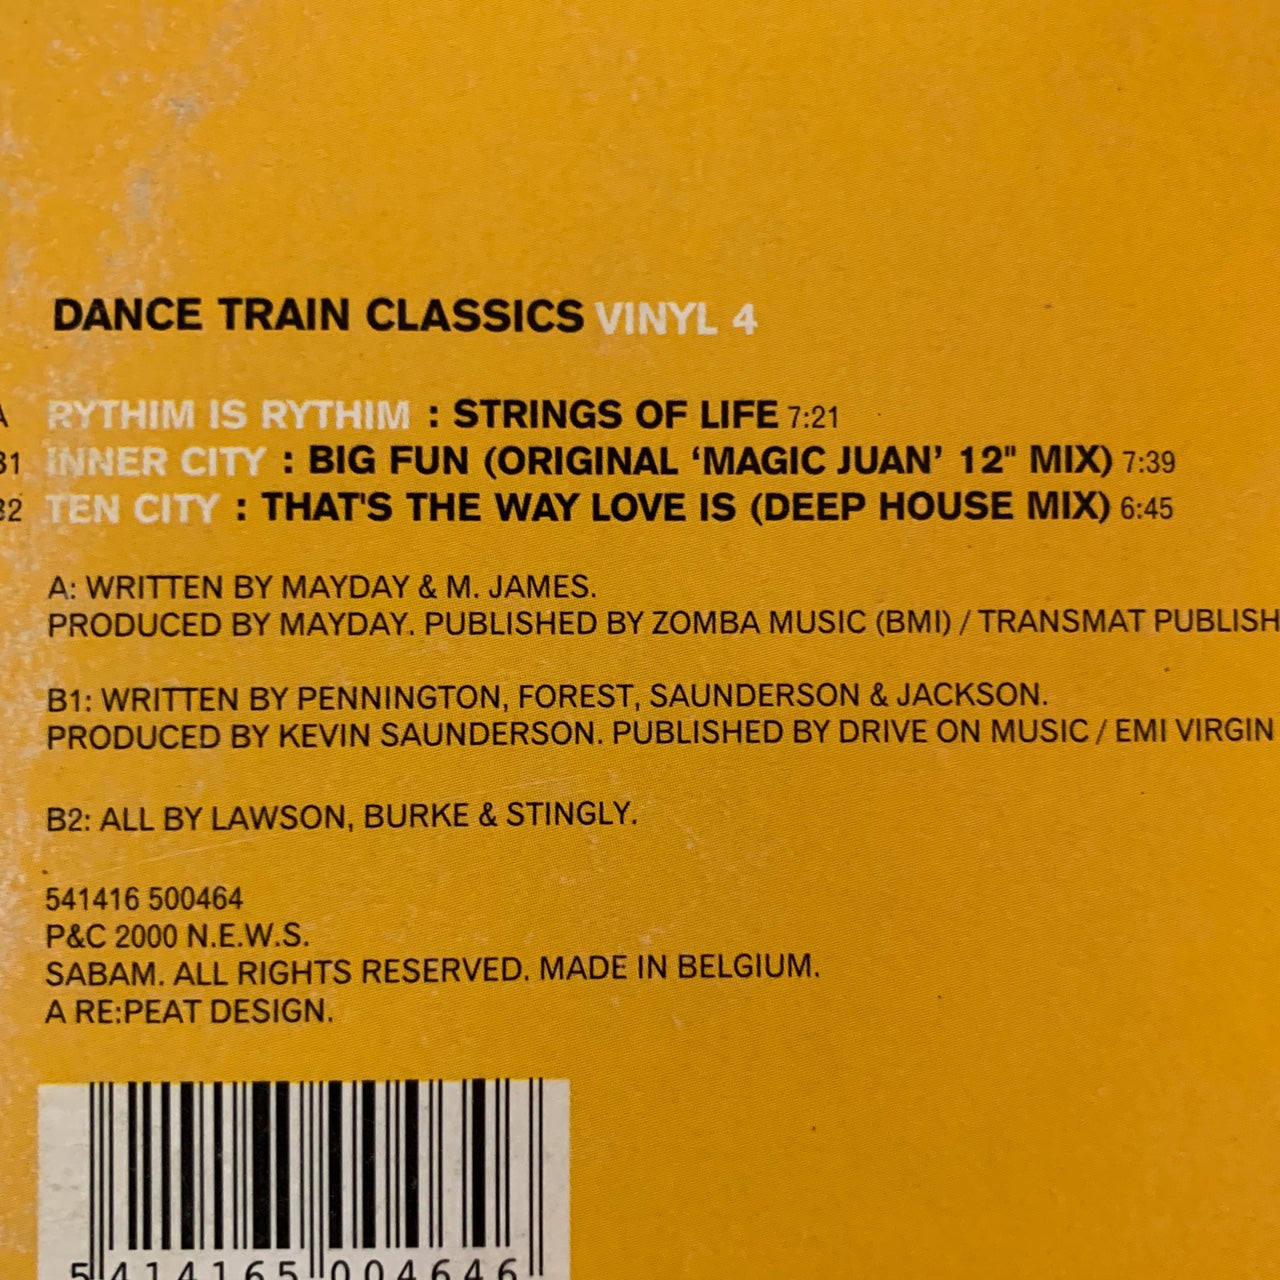 Dance Train Classics Vol 4 “Strings Of Life” / “Big Fun”  / "That's The Way Love Is" 3 Track 12inch Vinyl